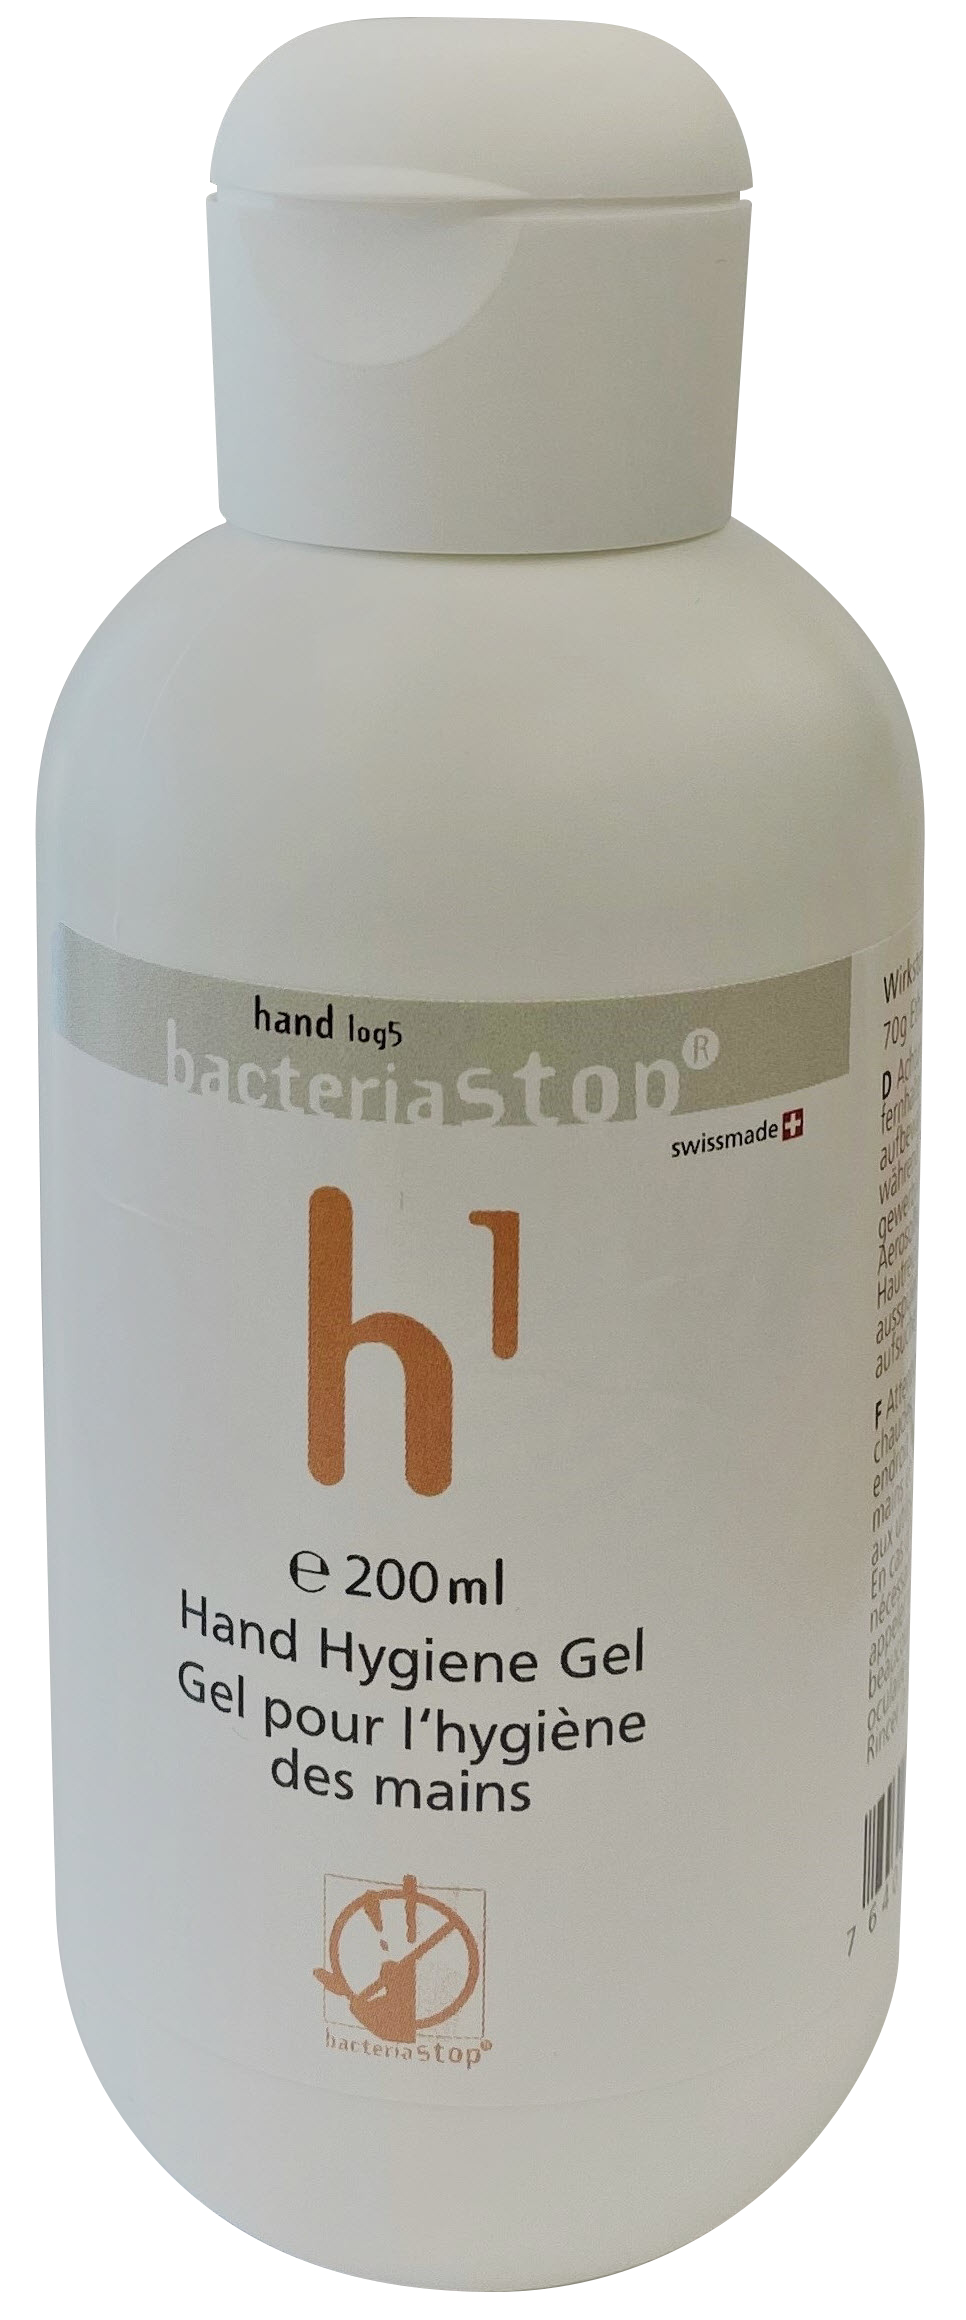 BACTERIASTOP Hand Hygiene Gel 01-H1-200ML 200ml 200ml